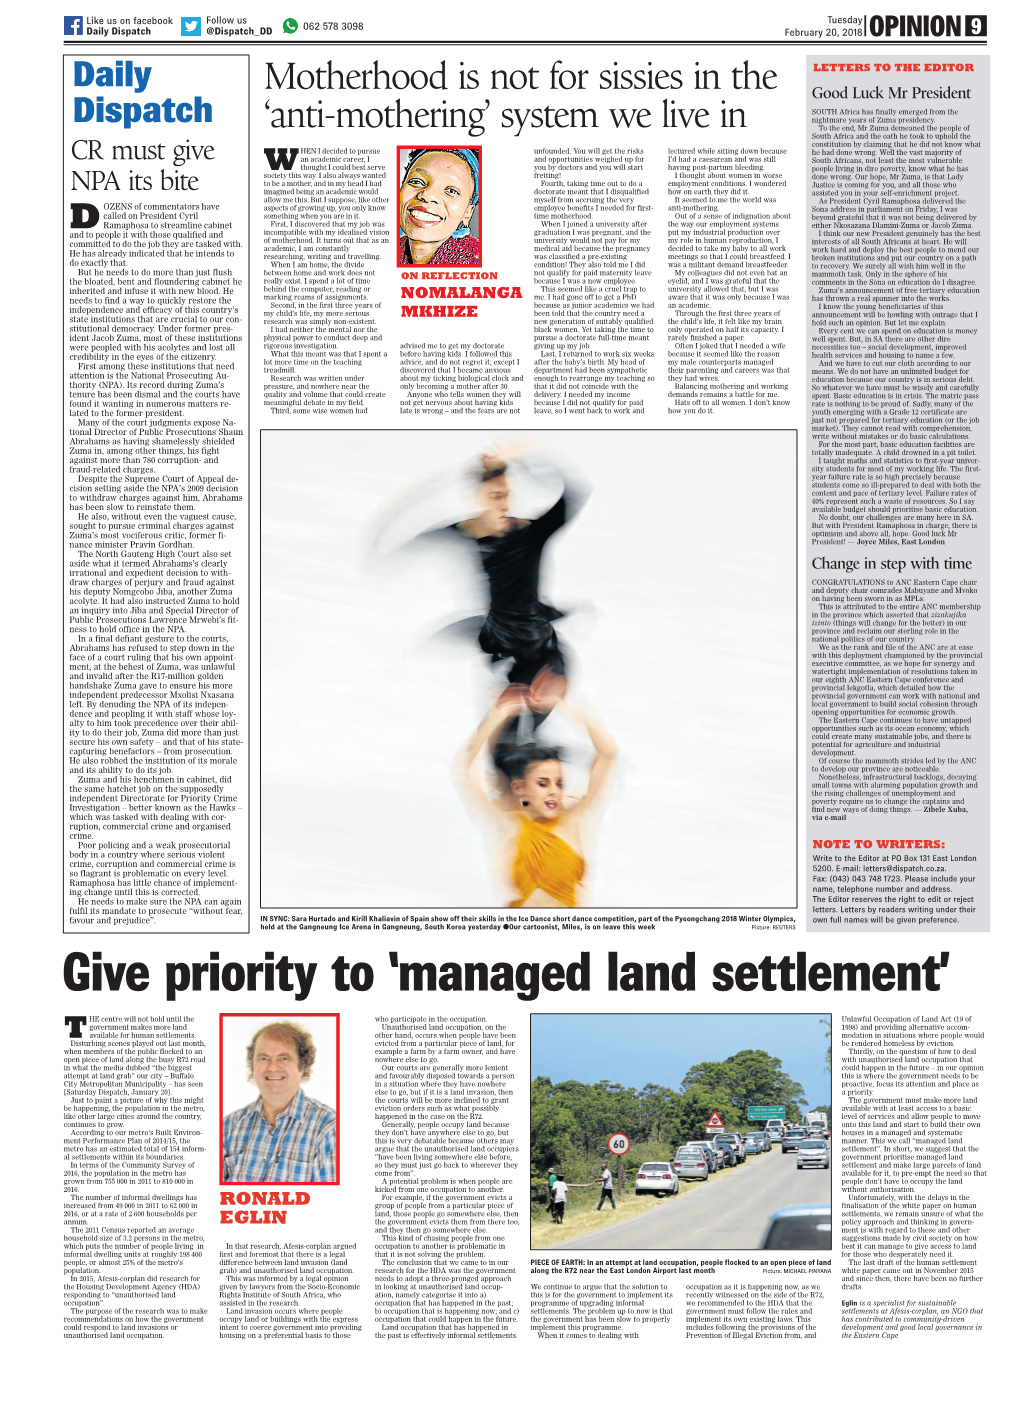 Managed Land Settlement’